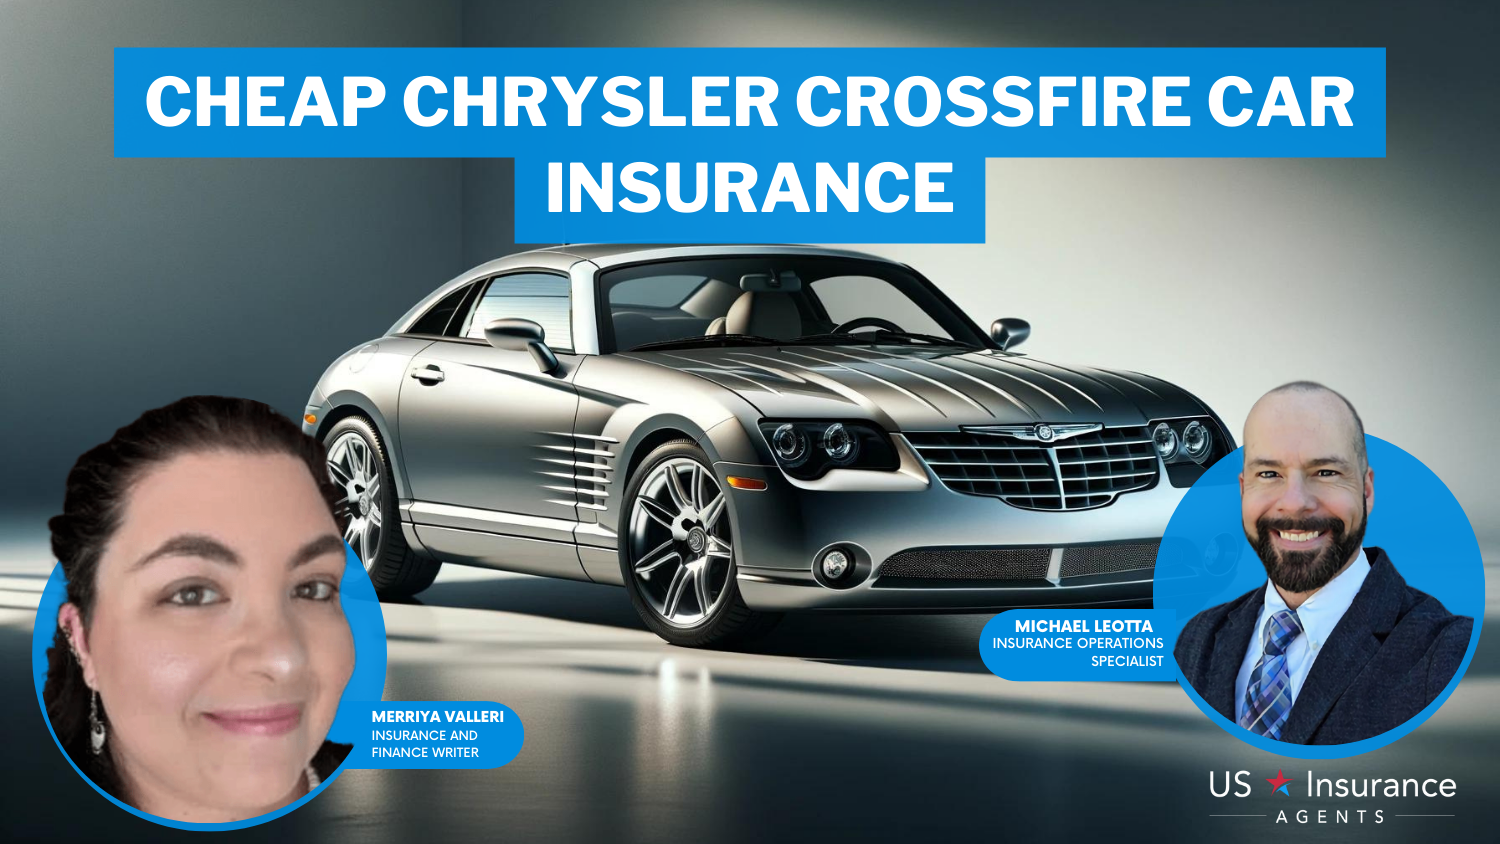 State Farm, Farmers, USAA: Cheap Chrysler Crossfire Car Insurance